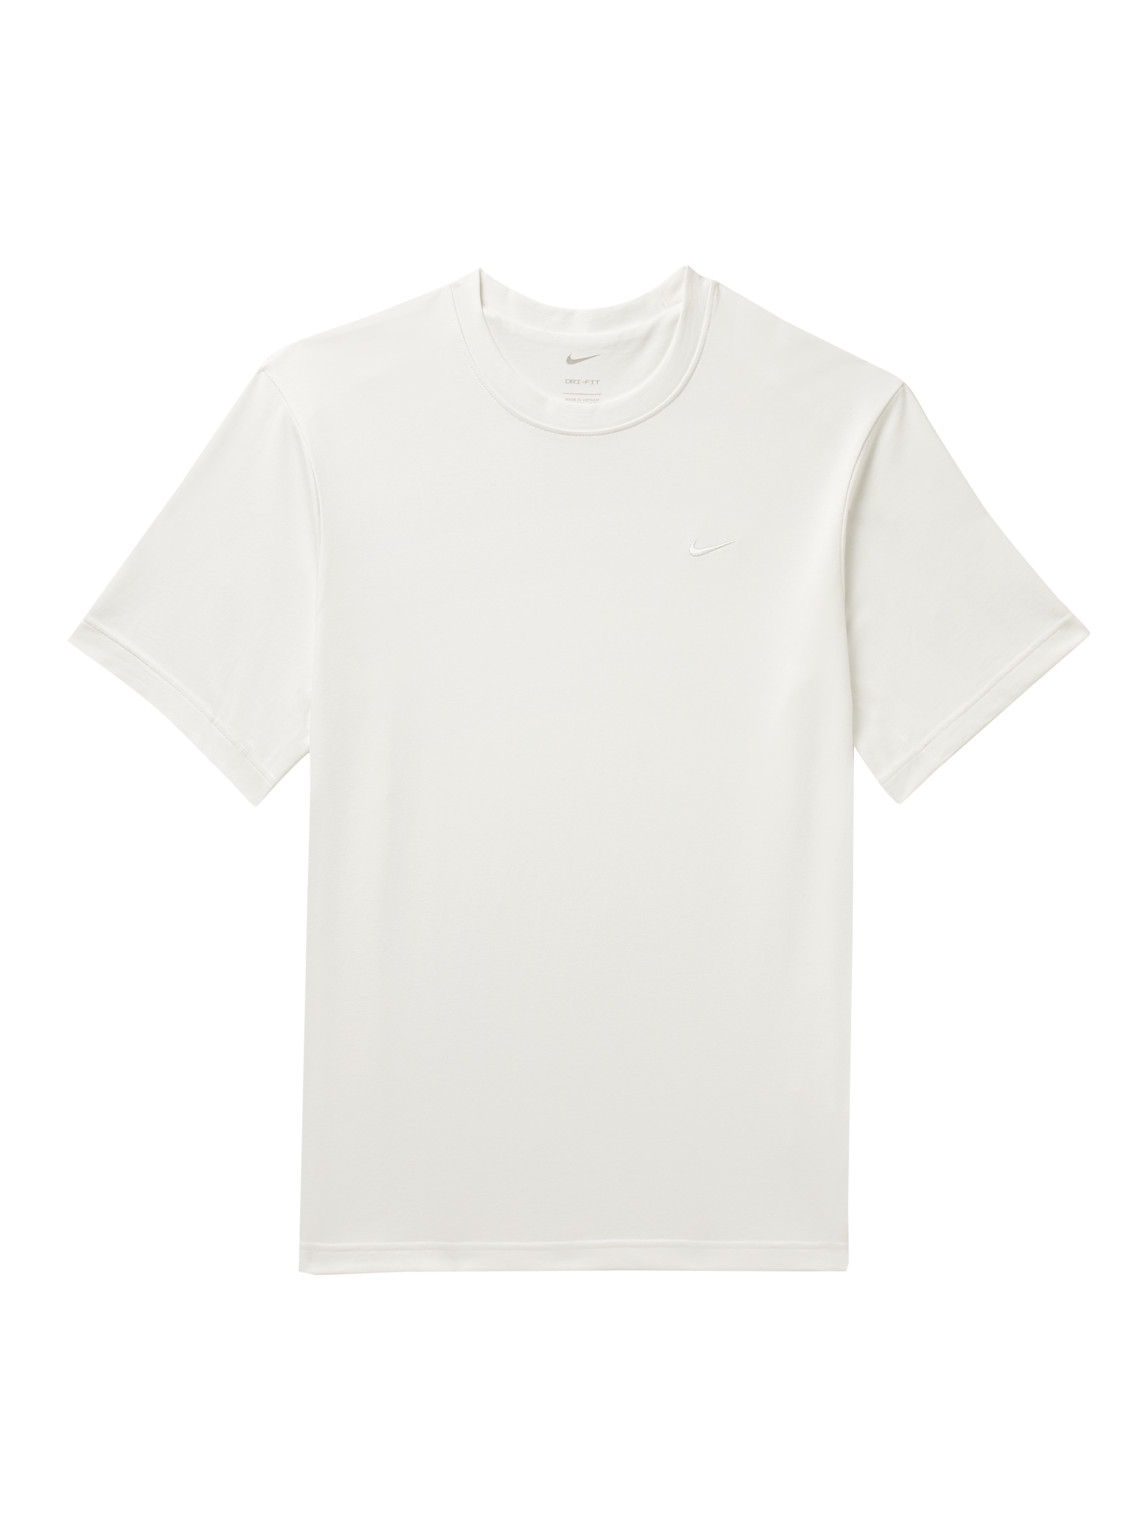 Primary Cotton-Blend Dri-FIT T-Shirt